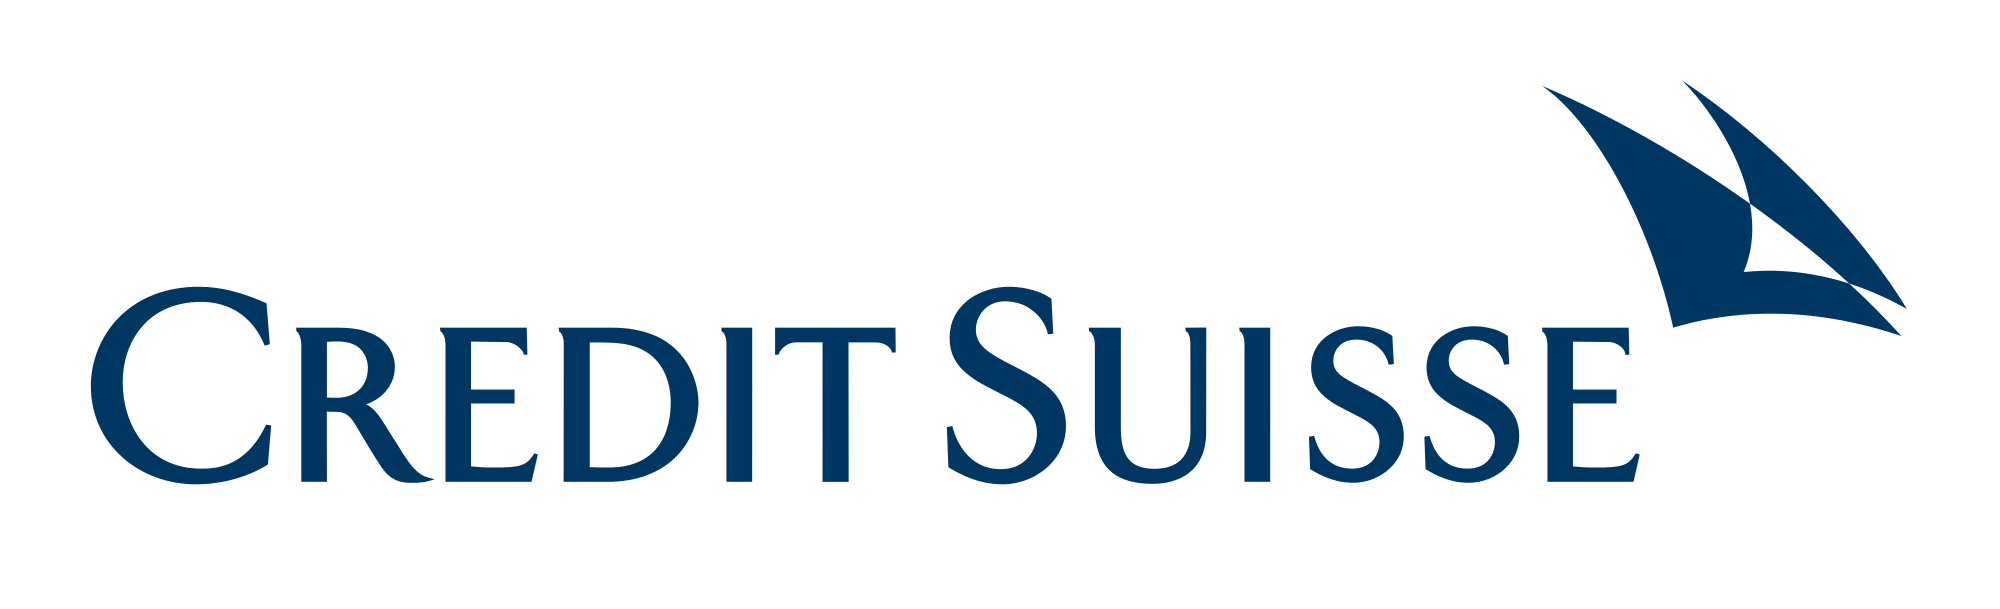 Credit Suisse Brand Logo